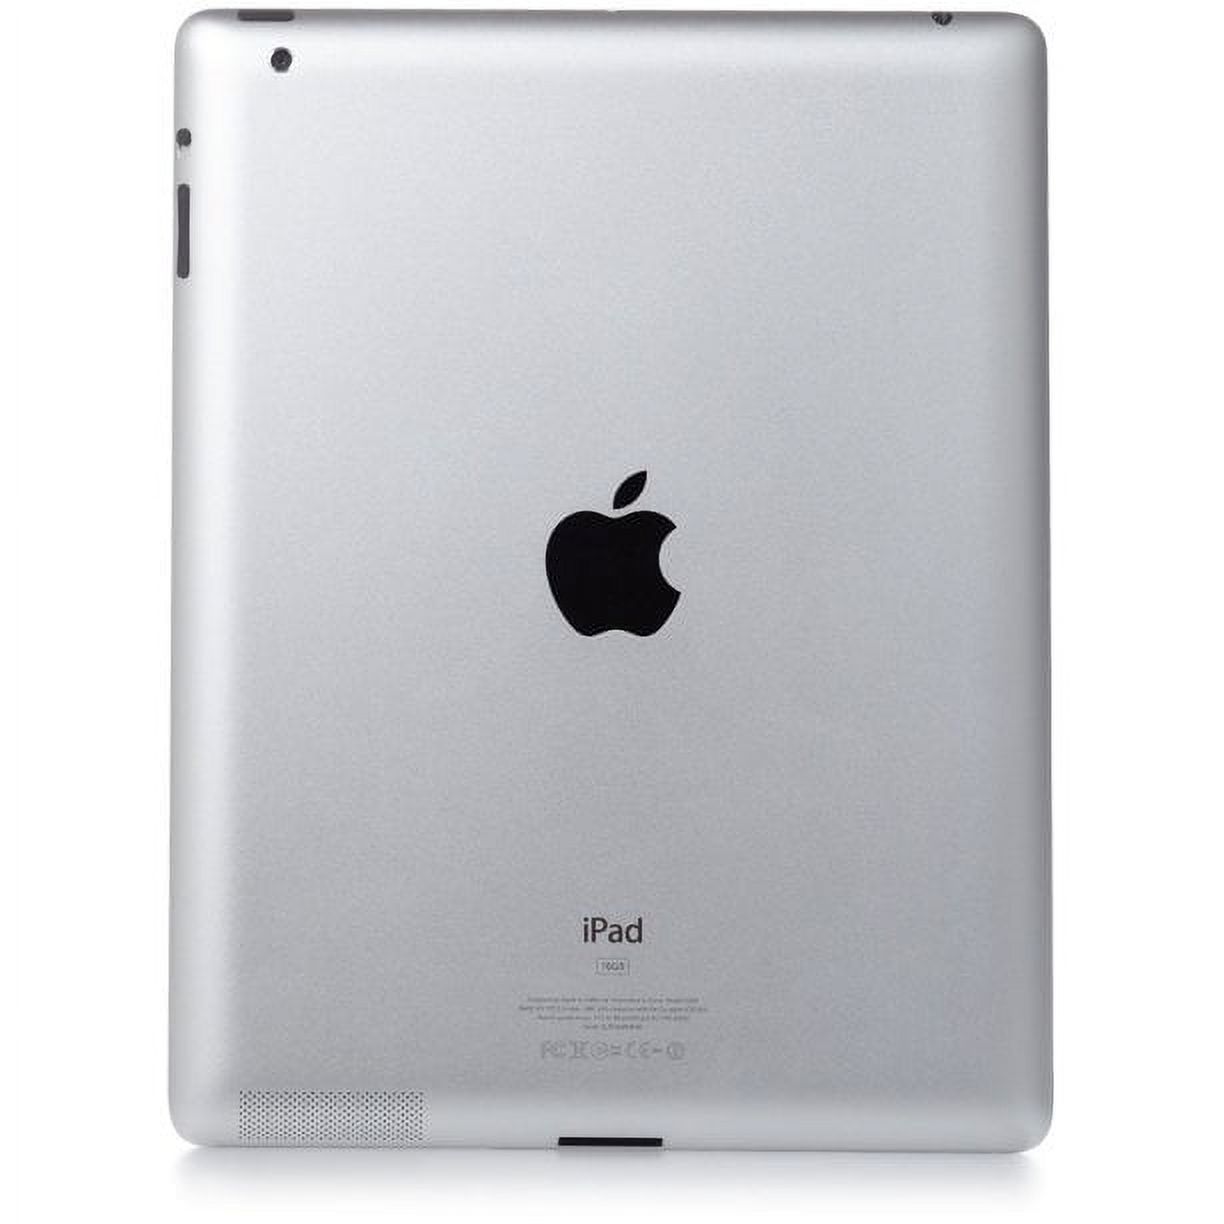 Apple MC954LL/A iPad 2 16GB with Wi-Fi - Black (Used ) - image 3 of 4